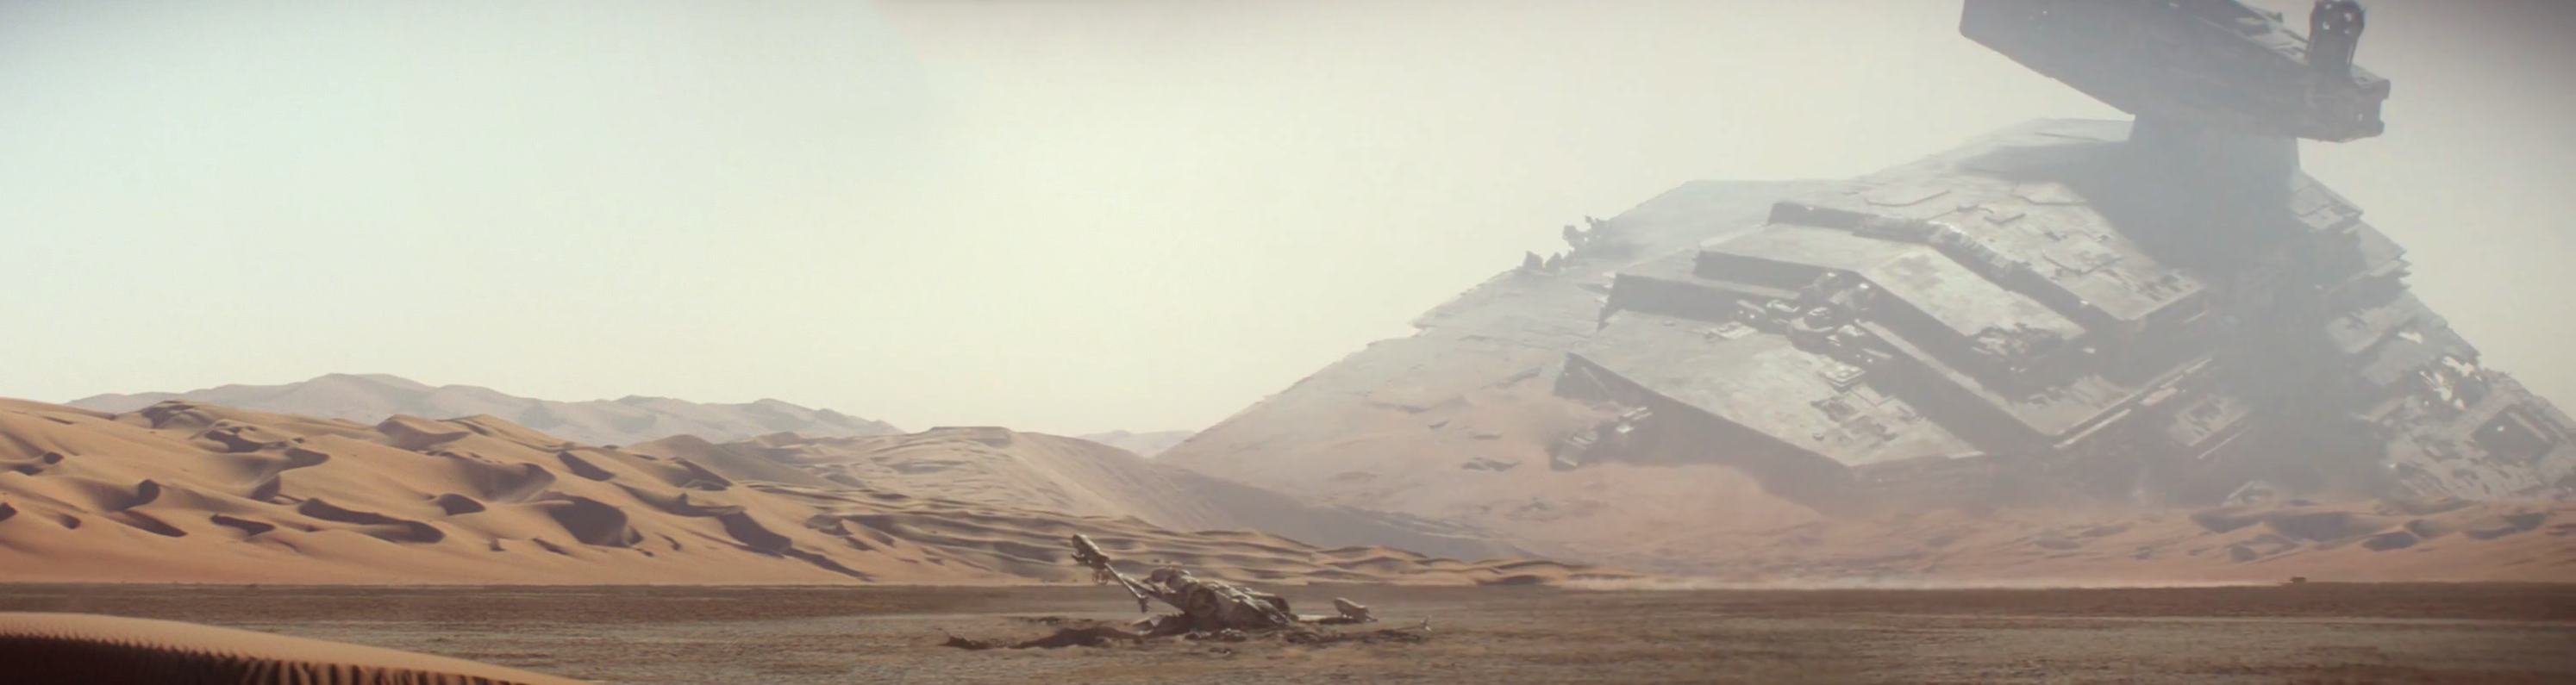 Star Wars The Force Awakens Trailer Starwars